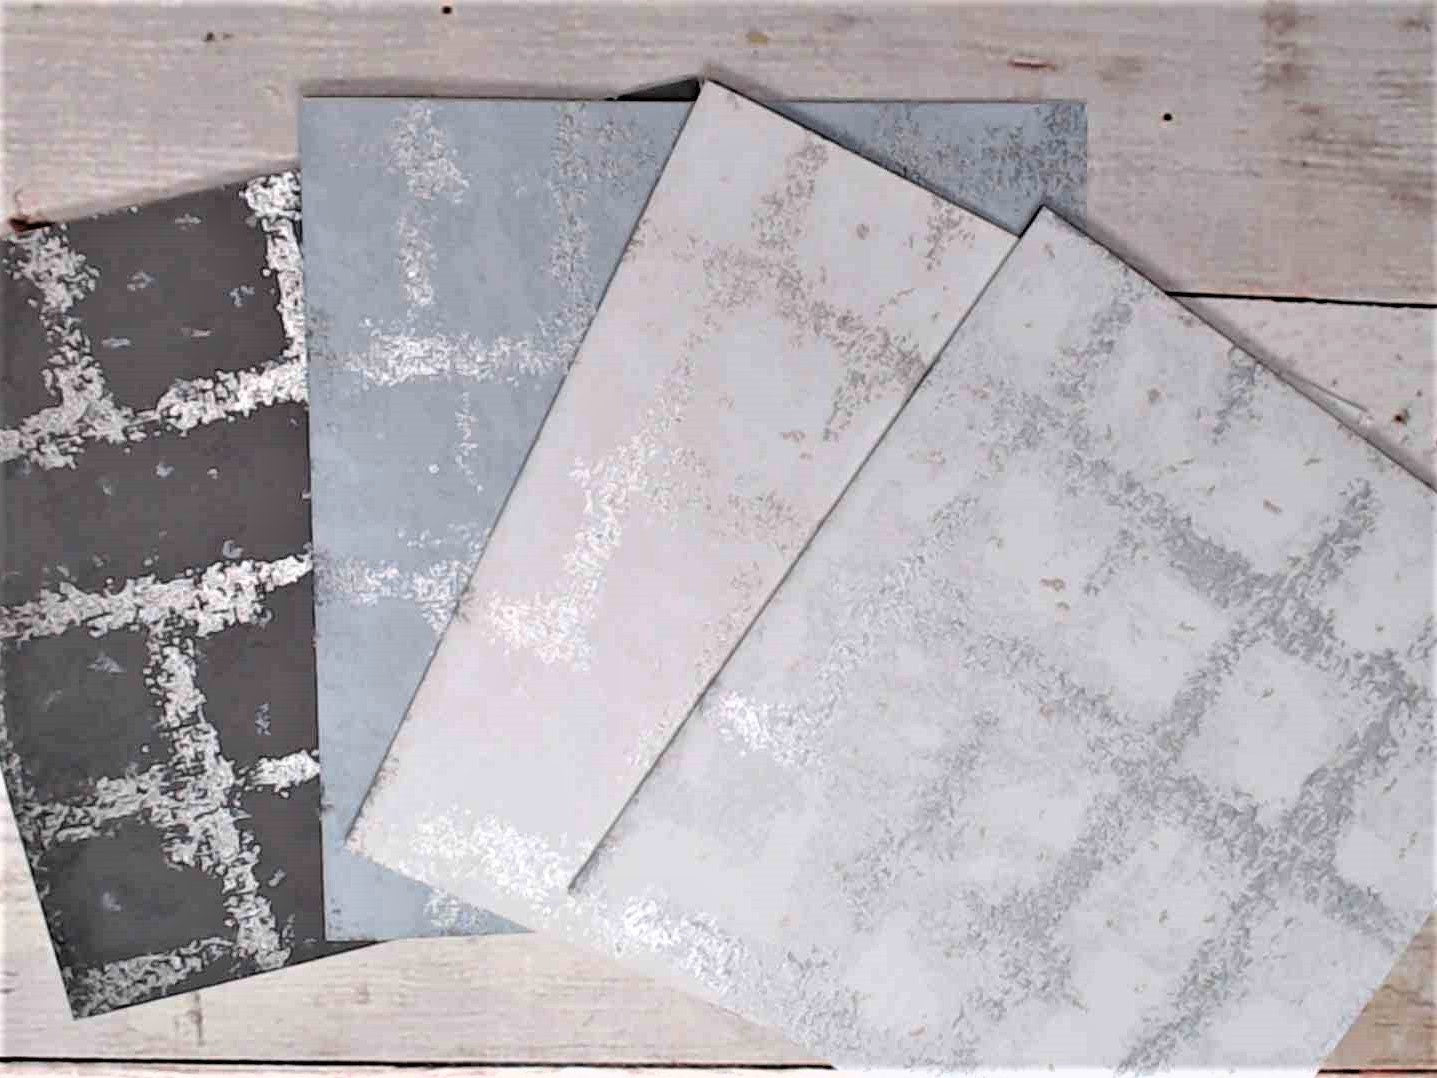 Wallpaper Sample Pack for Junk Journal Ephemera, Mixed Media or Collage - Geometric and Metallic Patterns - set of 5